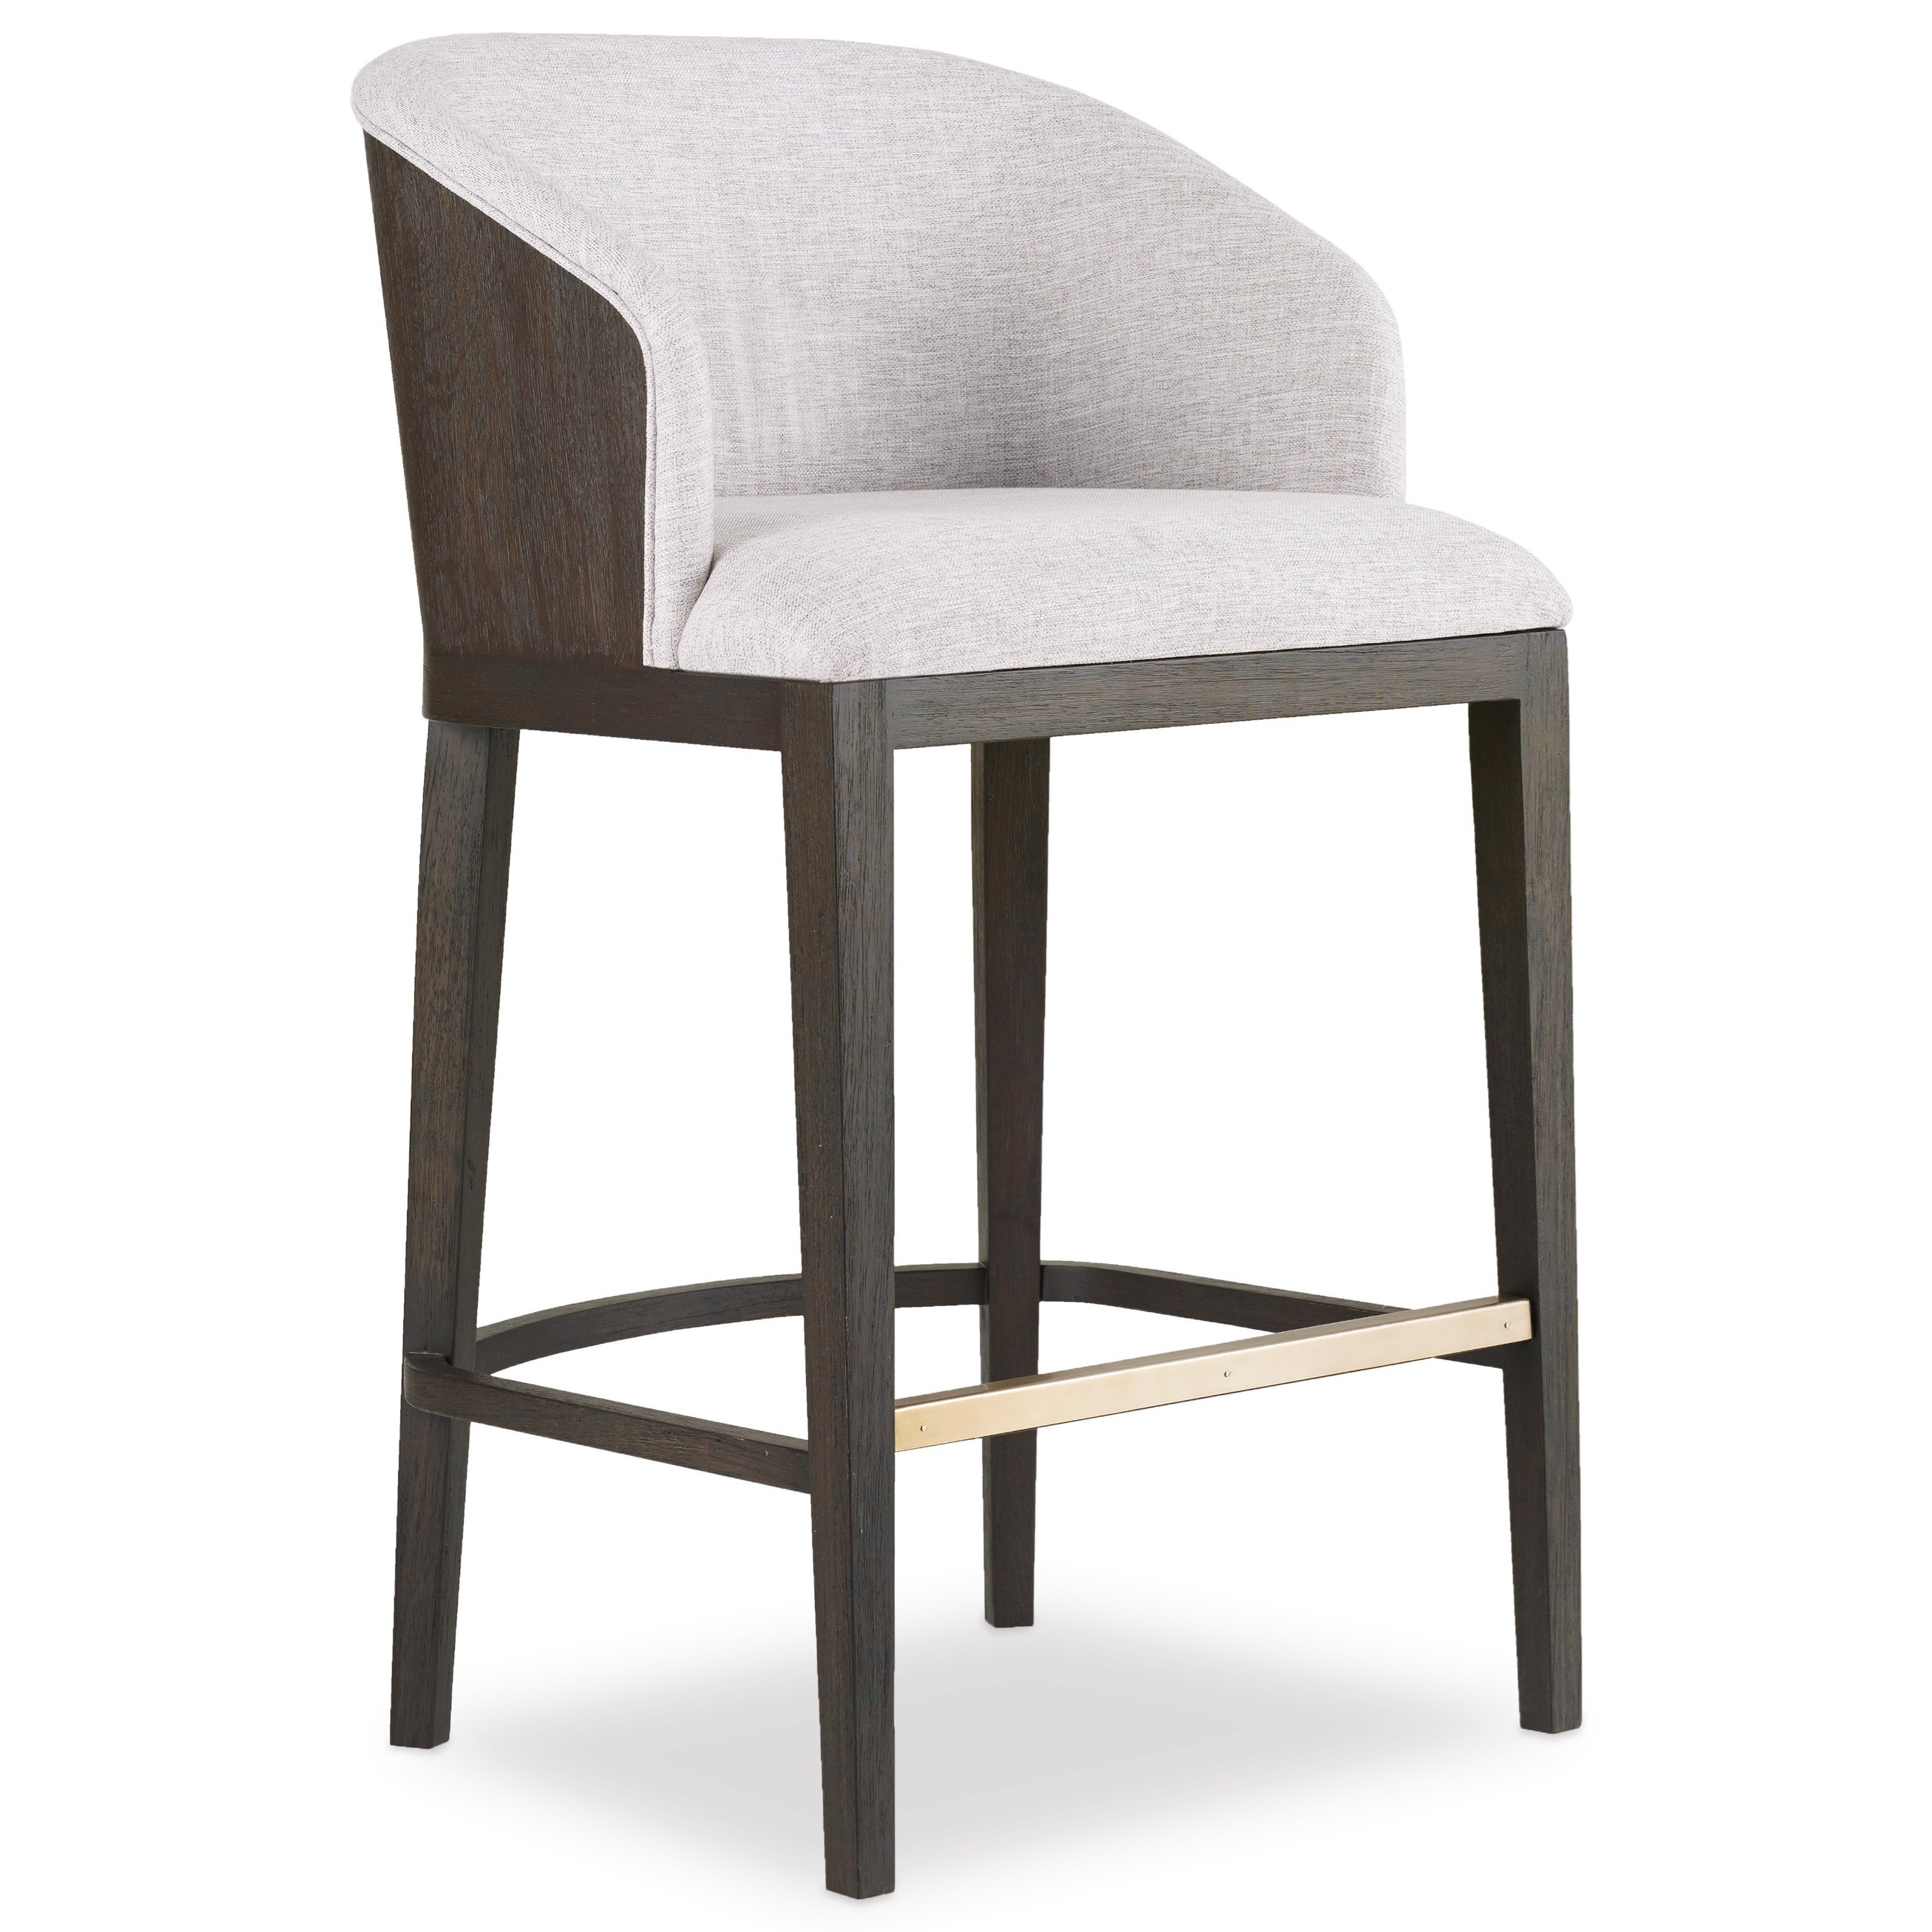 upholstered bar stools